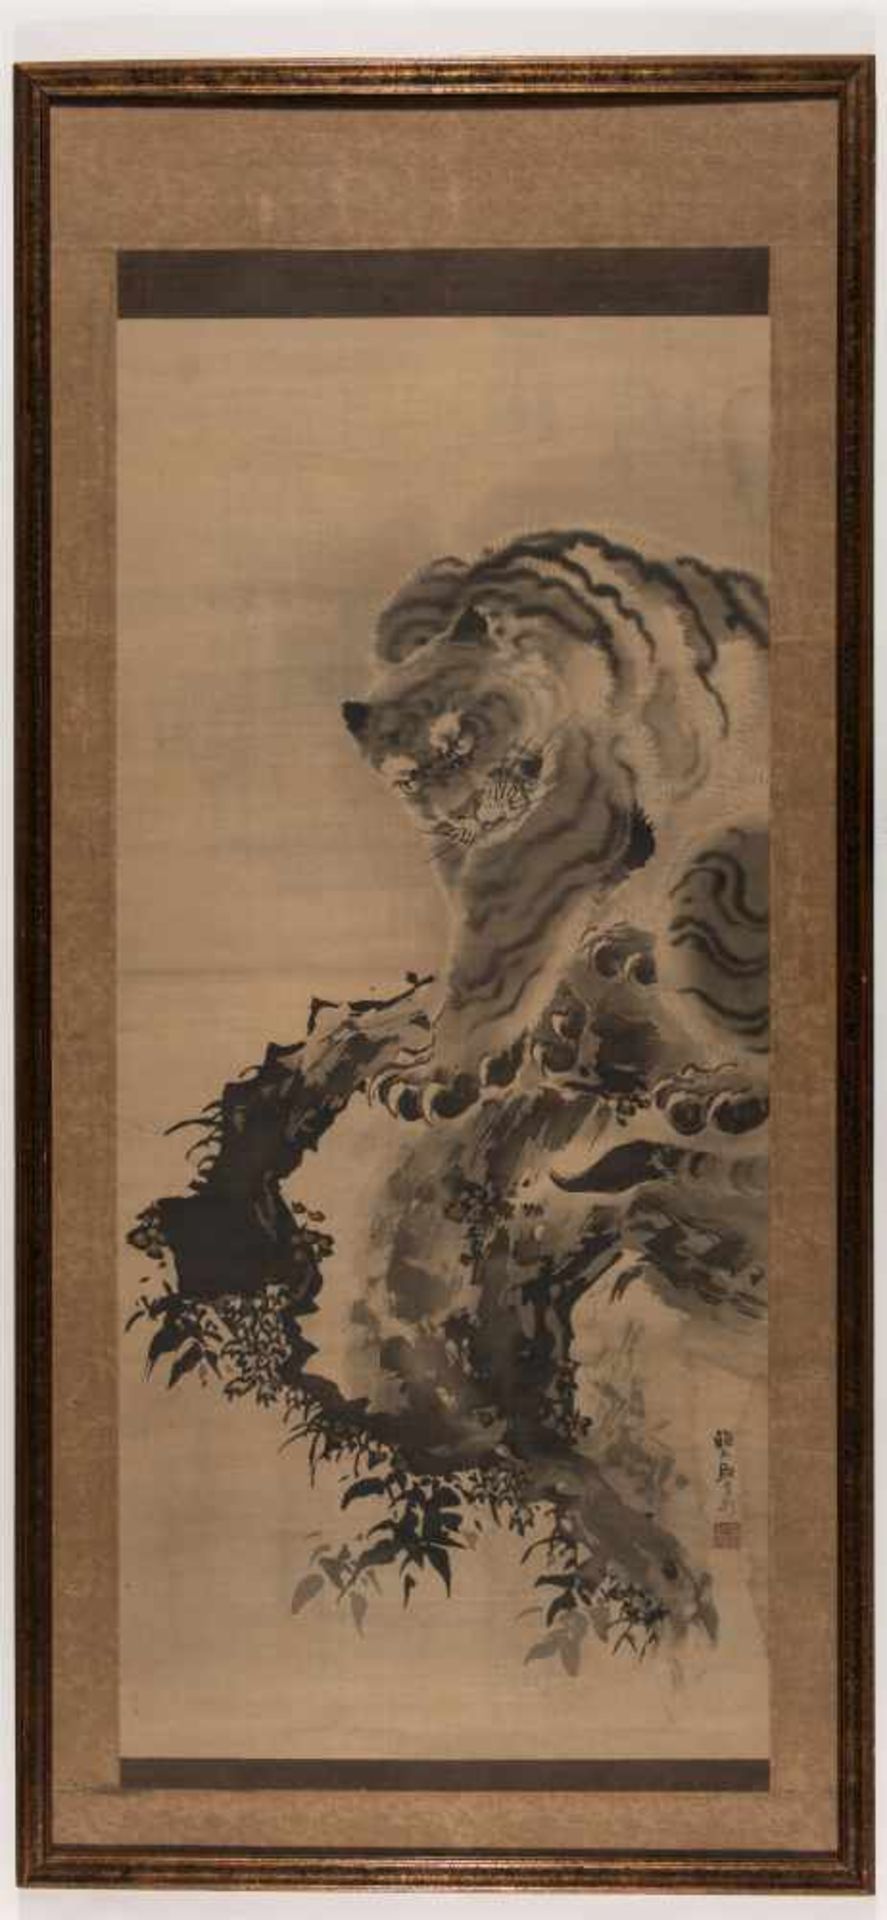 A JAPANESE SCROLL WITH TIGER- KISHI GANKU 1749-1838Kishi Ganku (1749-1838)Ink on silk, mounted to - Image 2 of 2